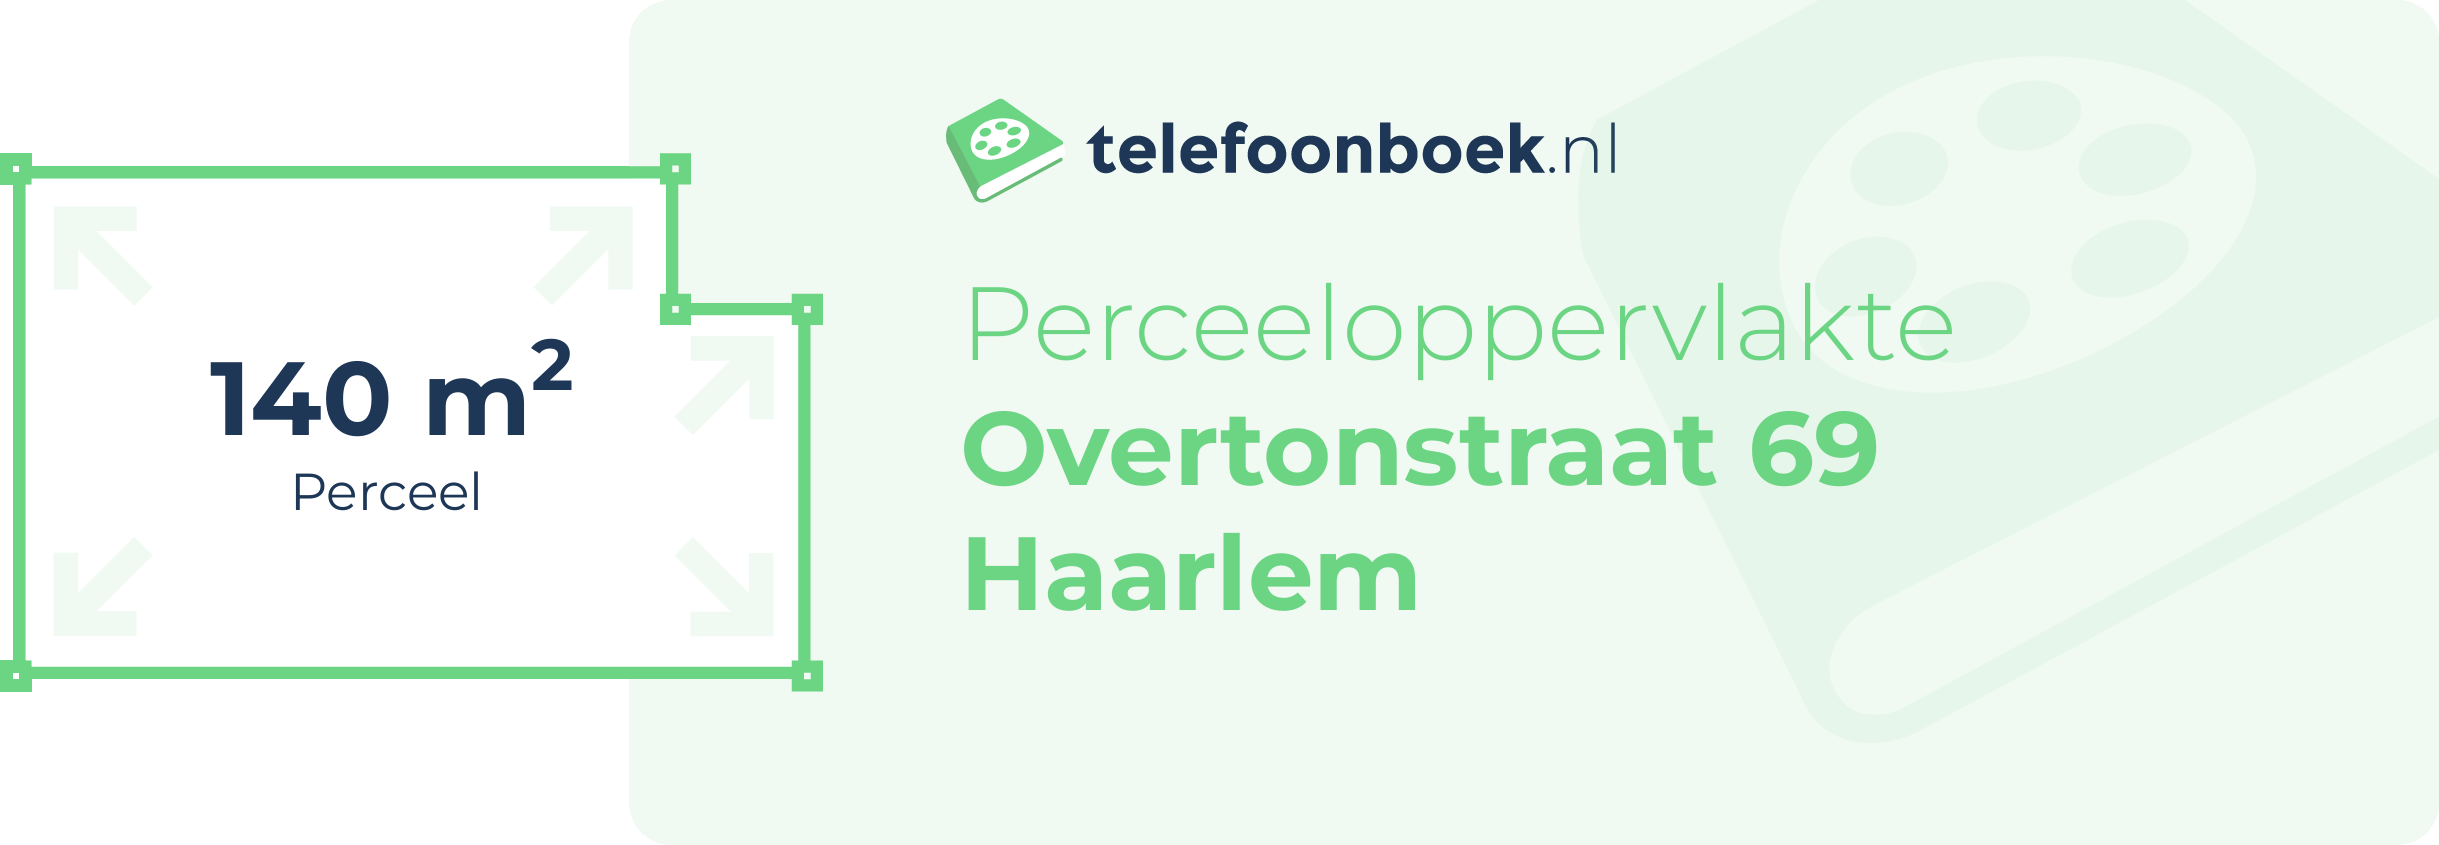 Perceeloppervlakte Overtonstraat 69 Haarlem